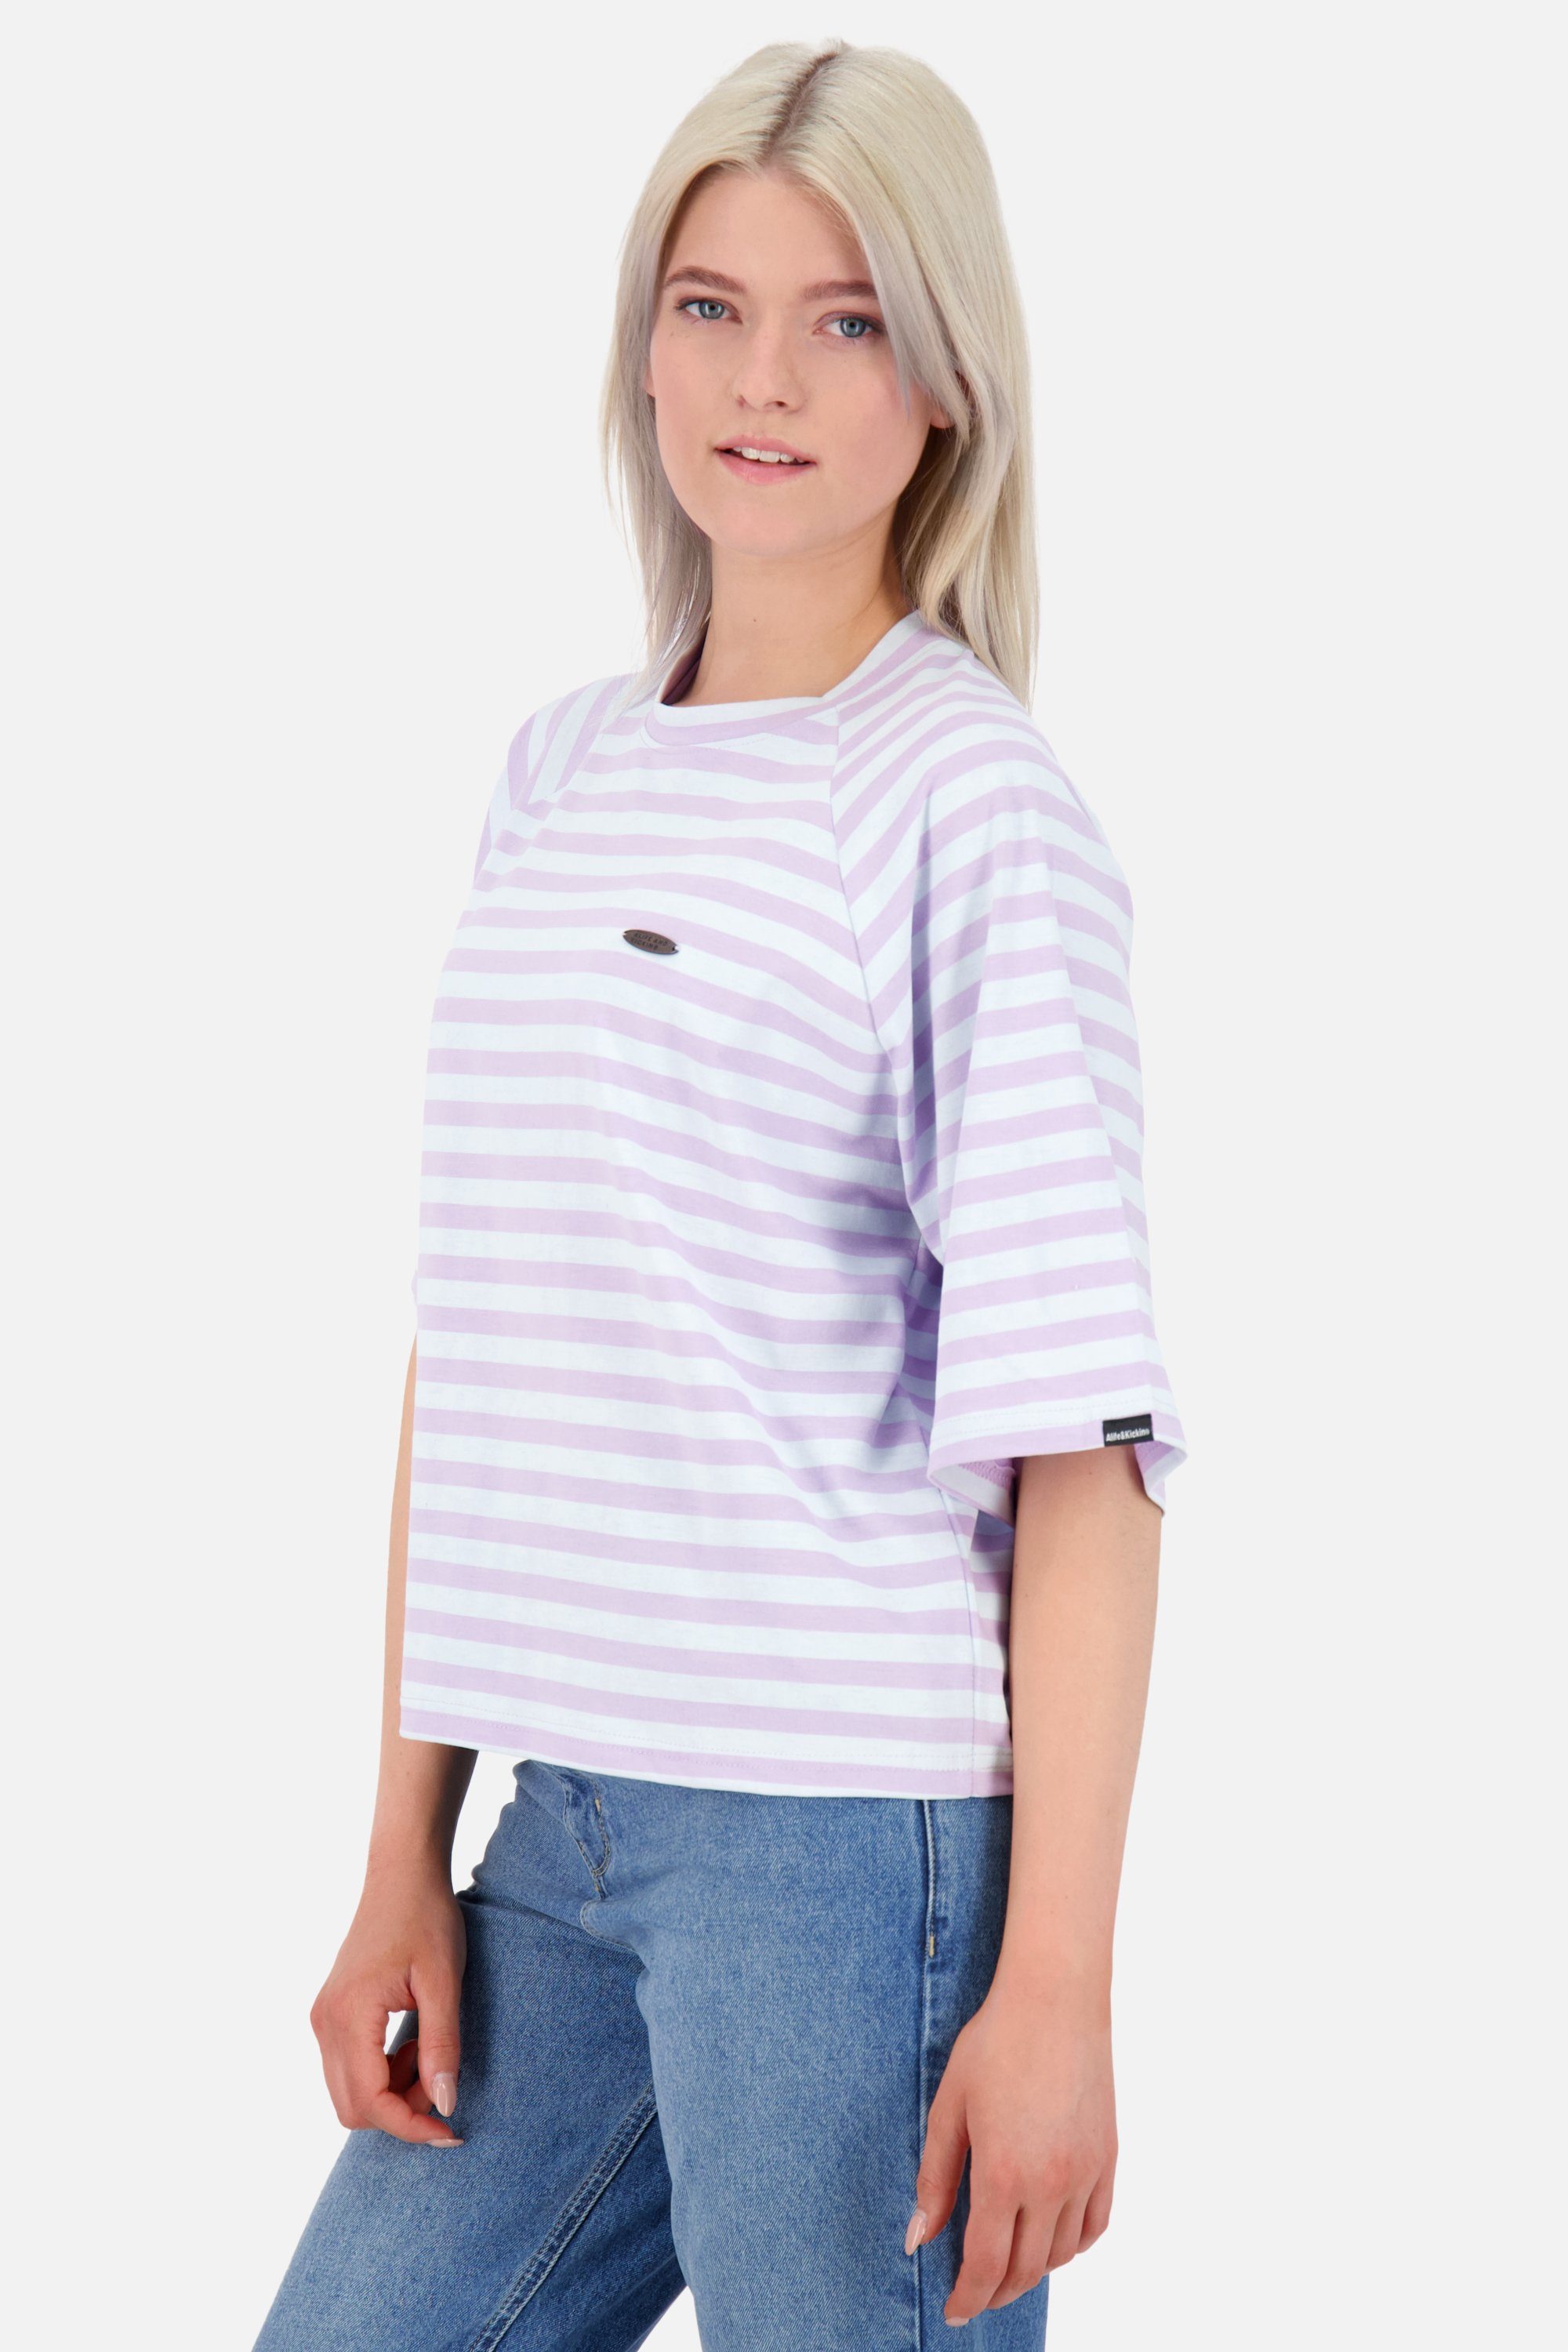 Alife & Shirt Z Kurzarmshirt, digital RubyAK Rundhalsshirt Kickin Shirt lavender Damen